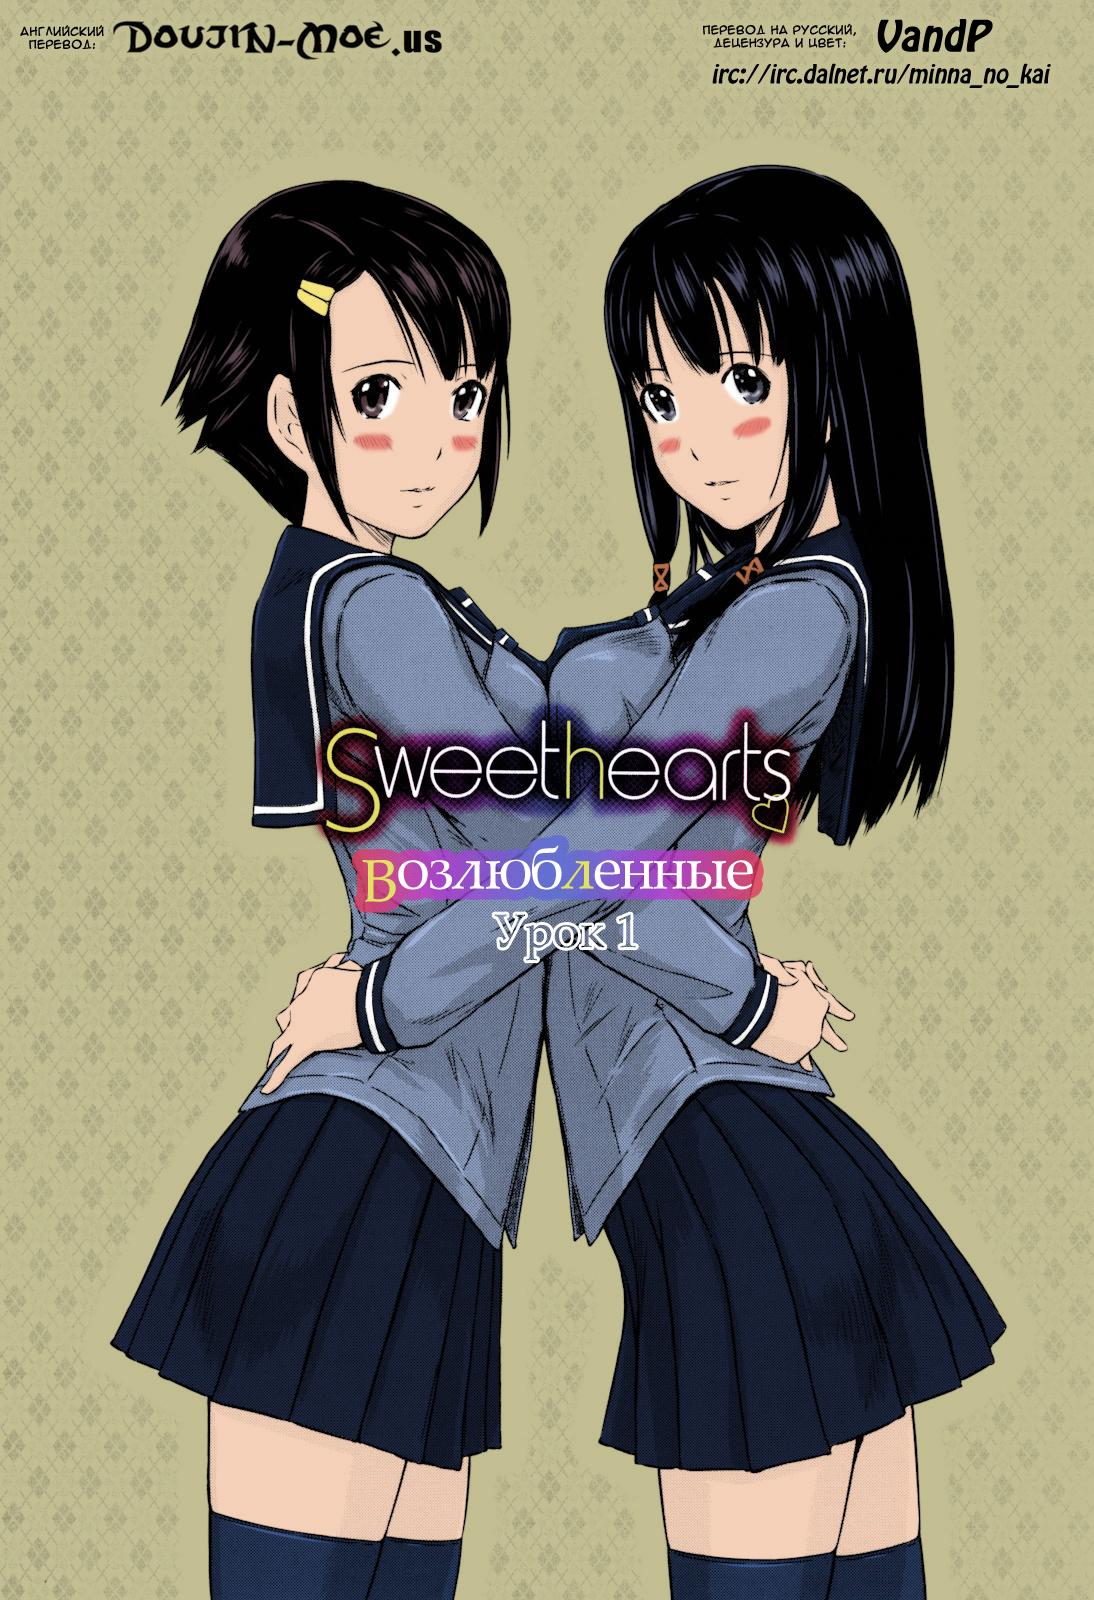 Sweethearts 7